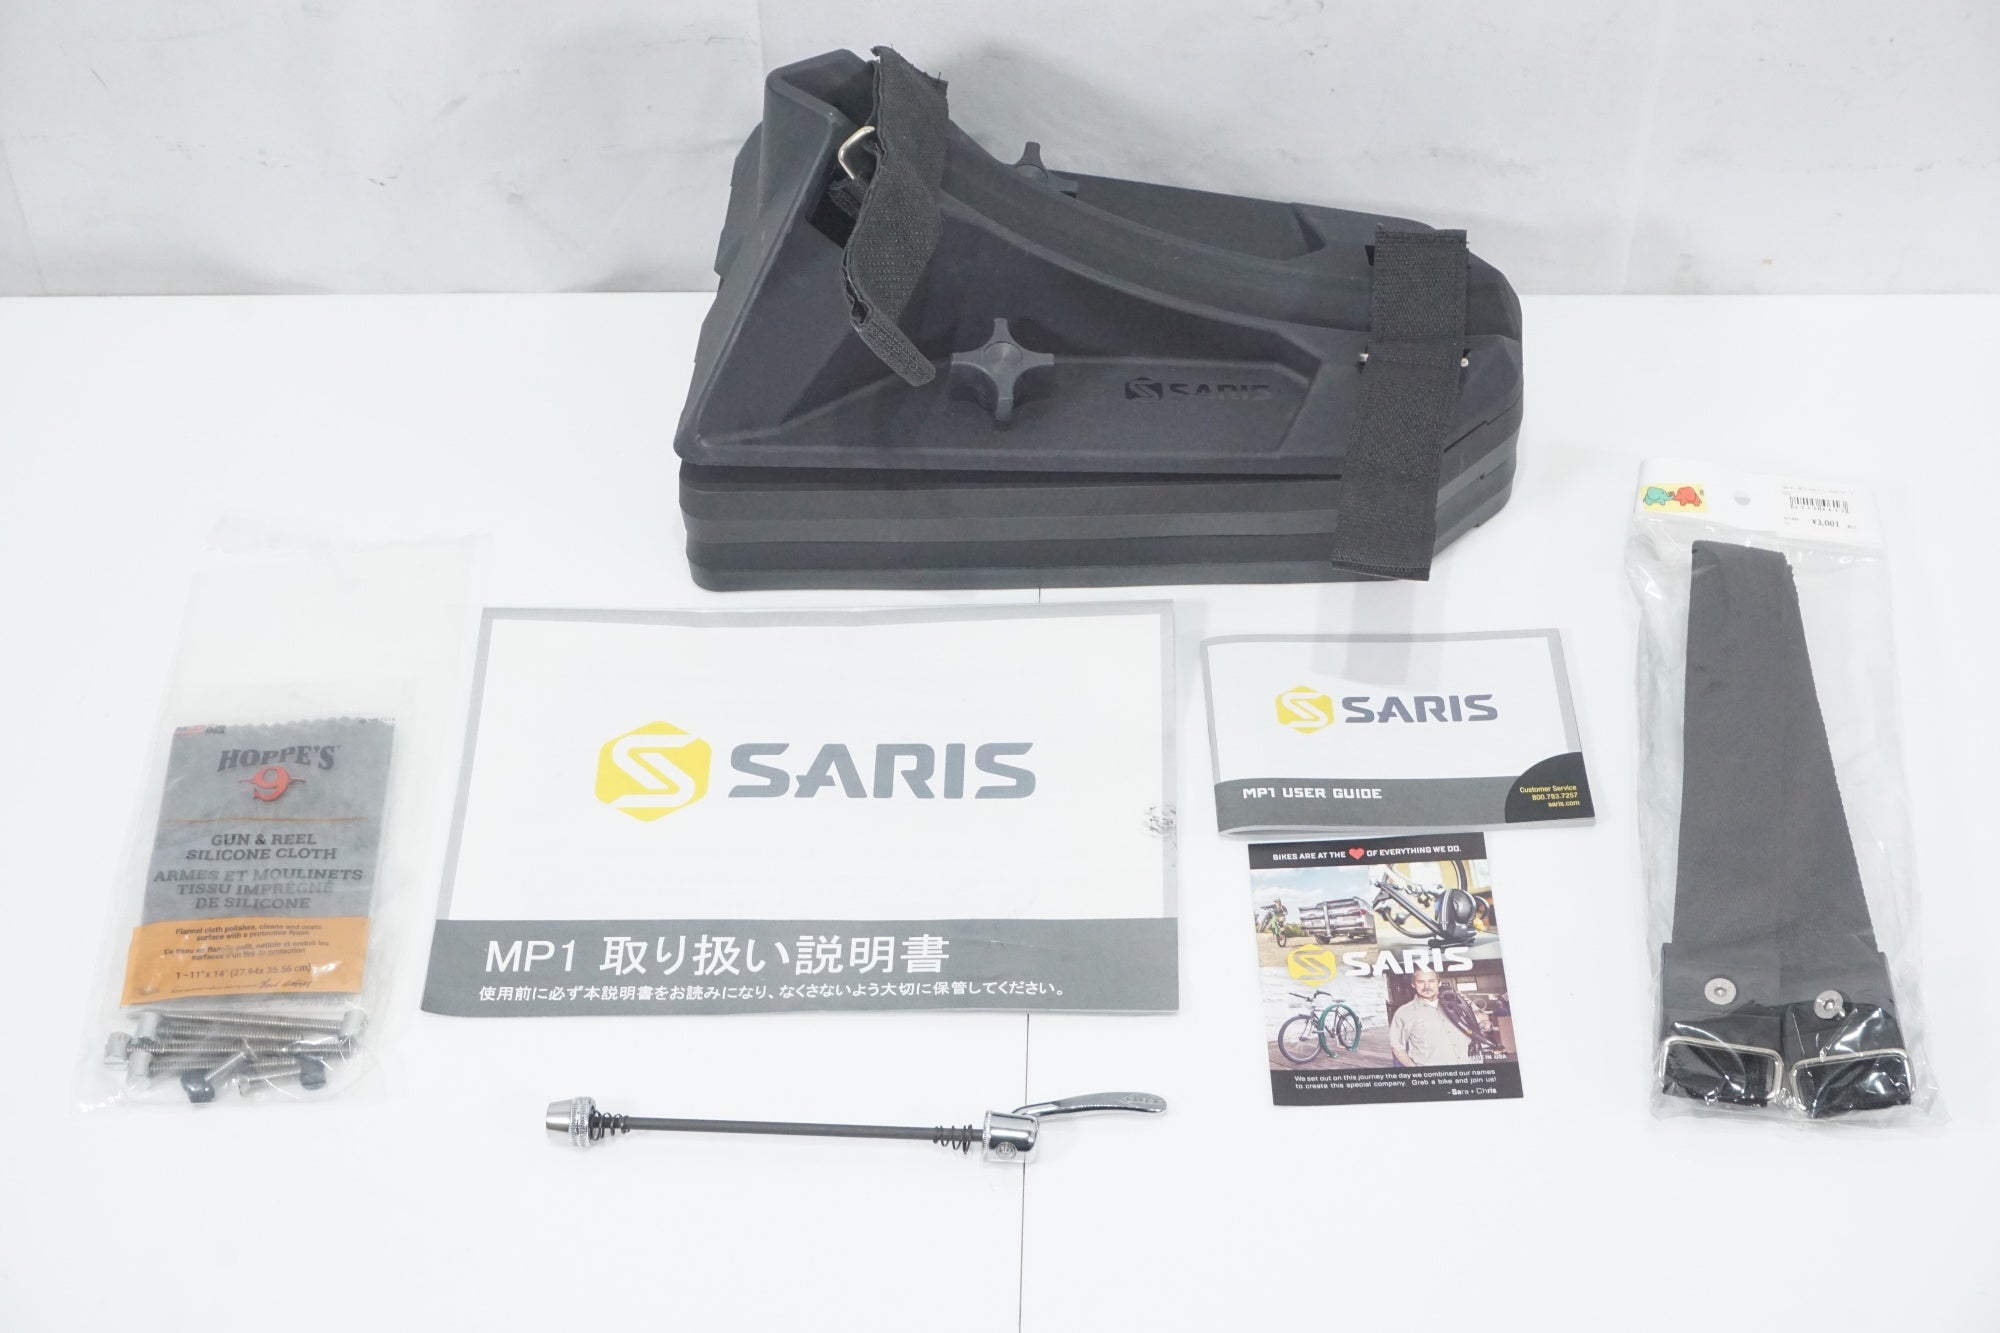 SARIS 「サリス」 MP1 モーションプラットフォーム / AKIBA店